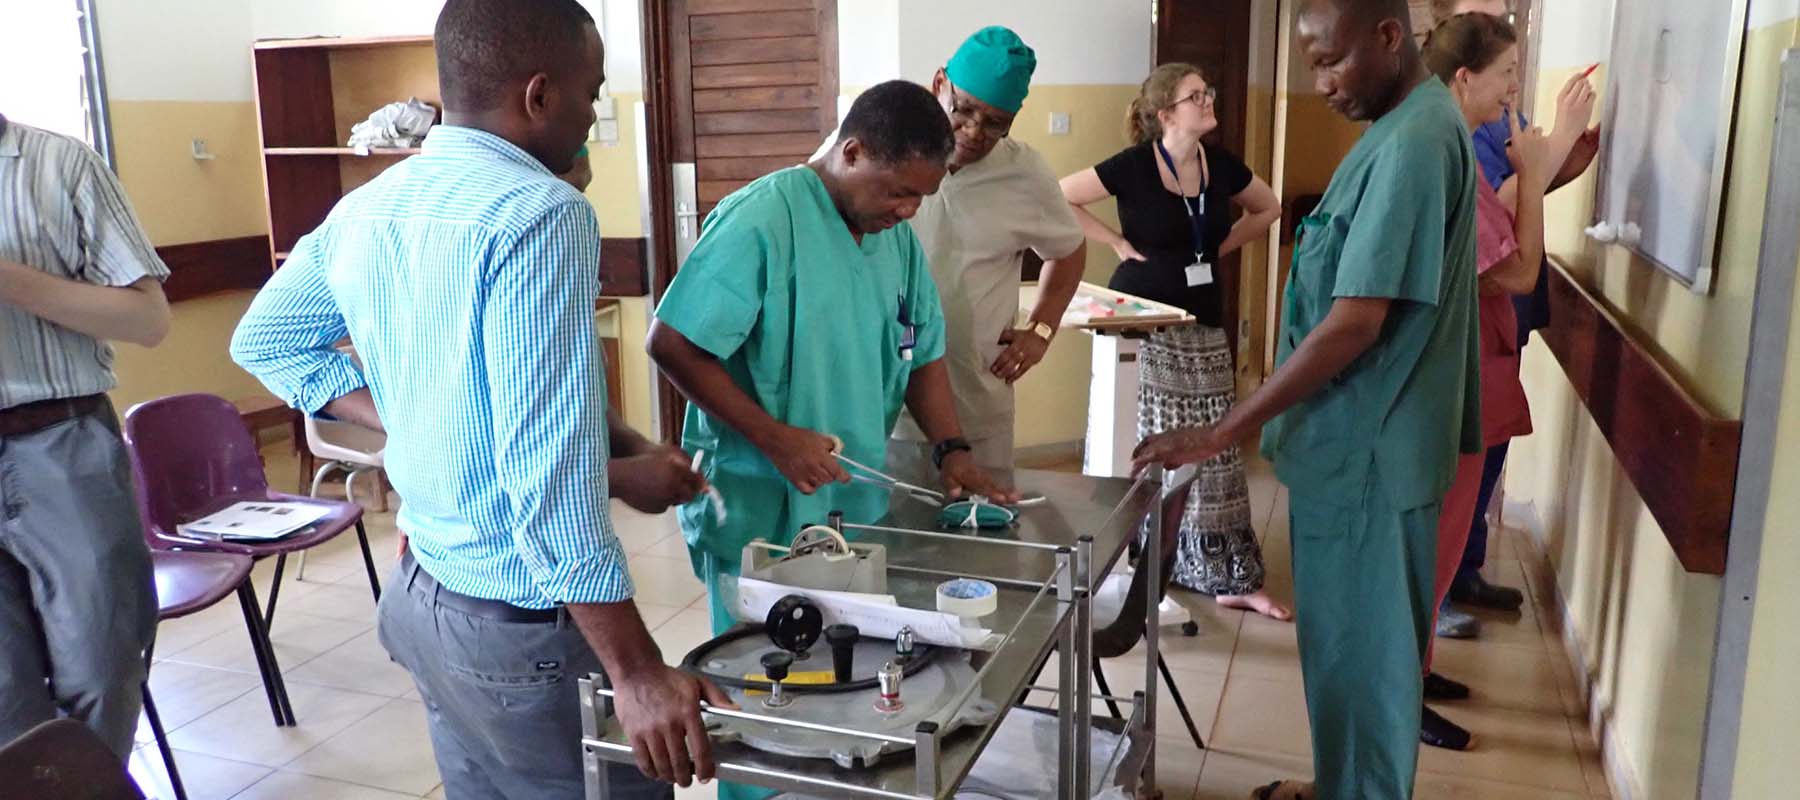 Medics working together in Tanzanian hospital